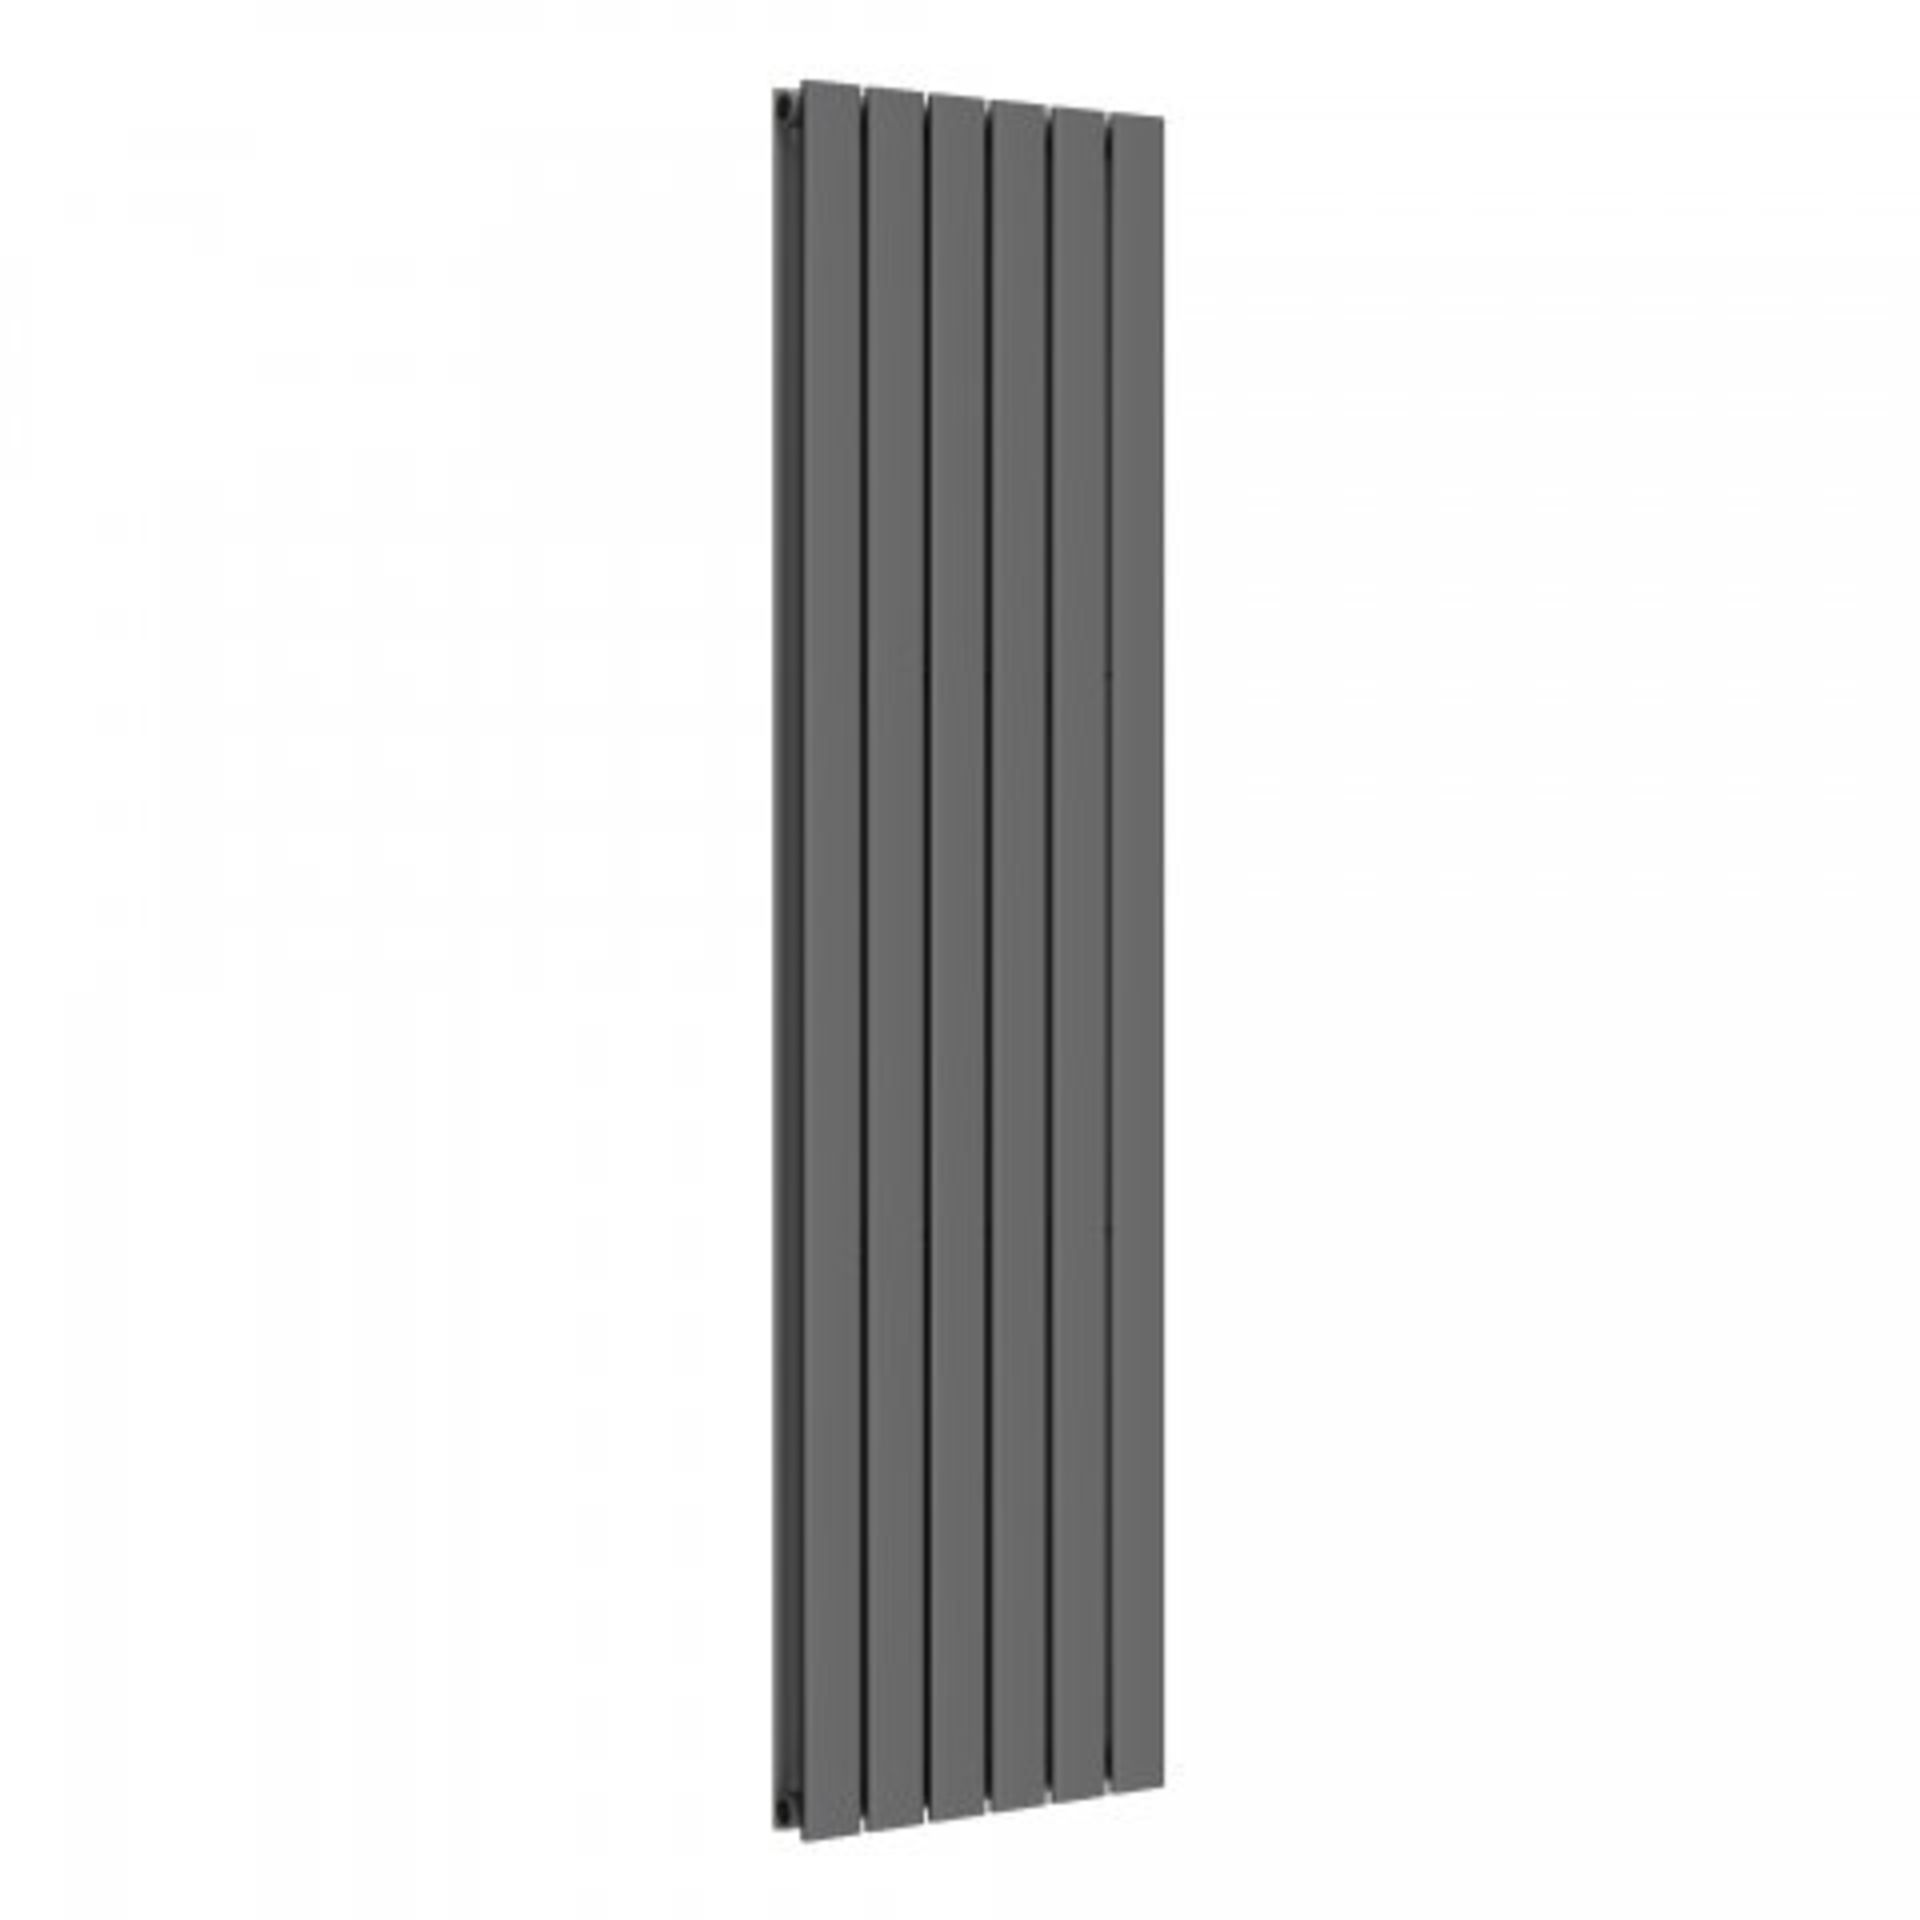 (I32) 1800x458mm Anthracite Double Flat Panel Vertical Radiator - Thera Range. RRP £499.99. Designer - Image 3 of 3